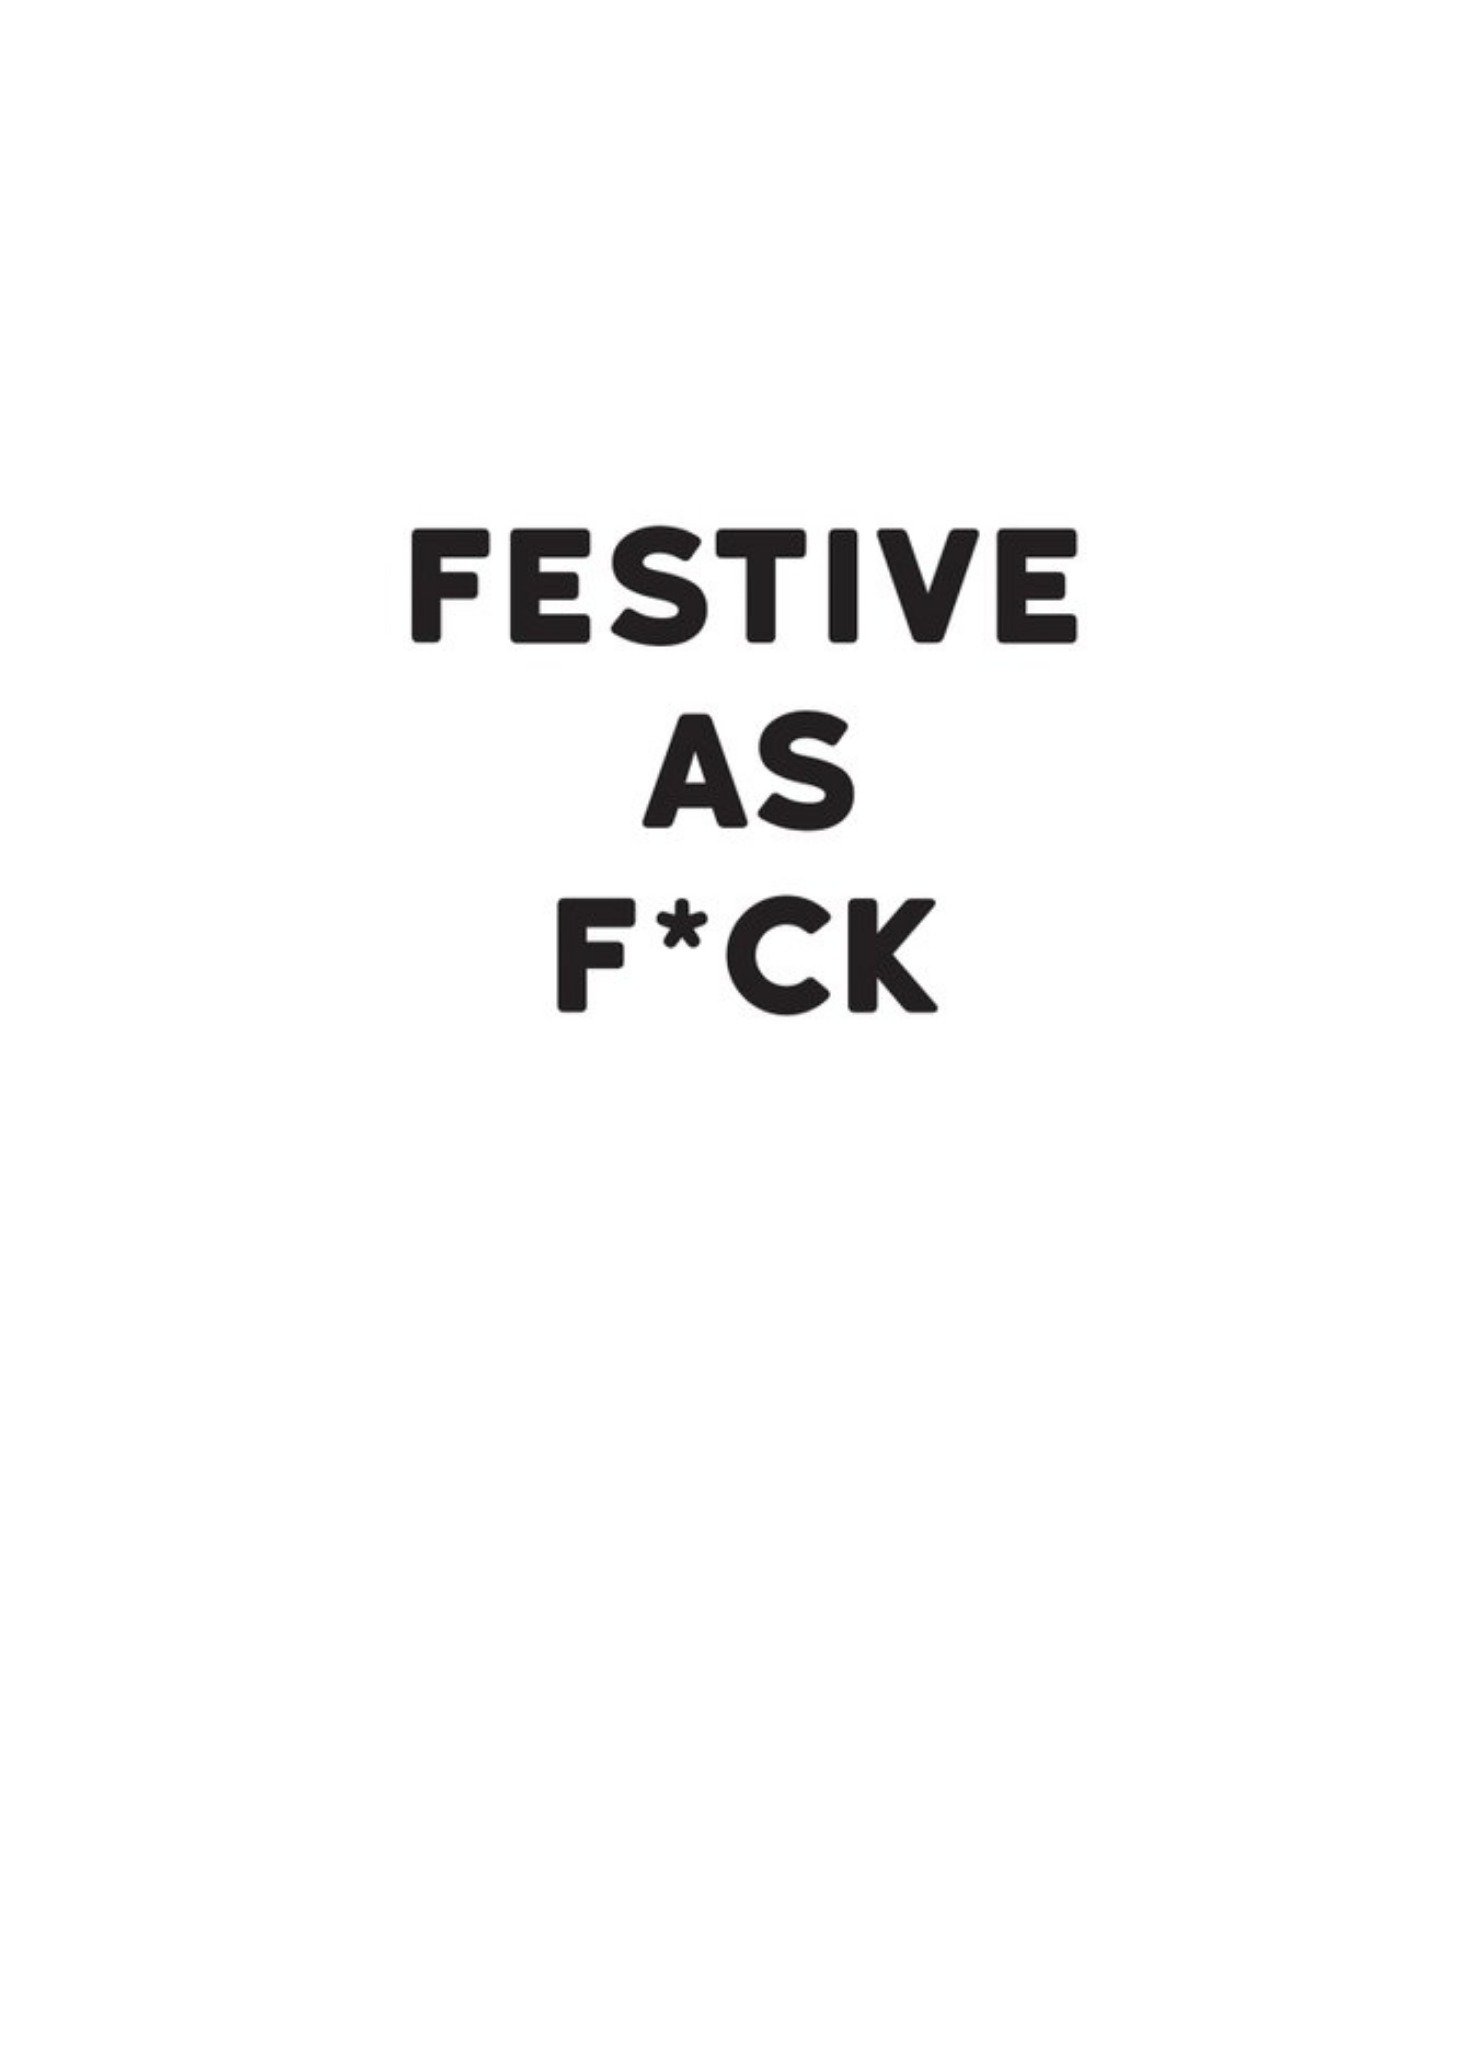 Moonpig Rude Funny Typographical Festive Christmas Card Ecard